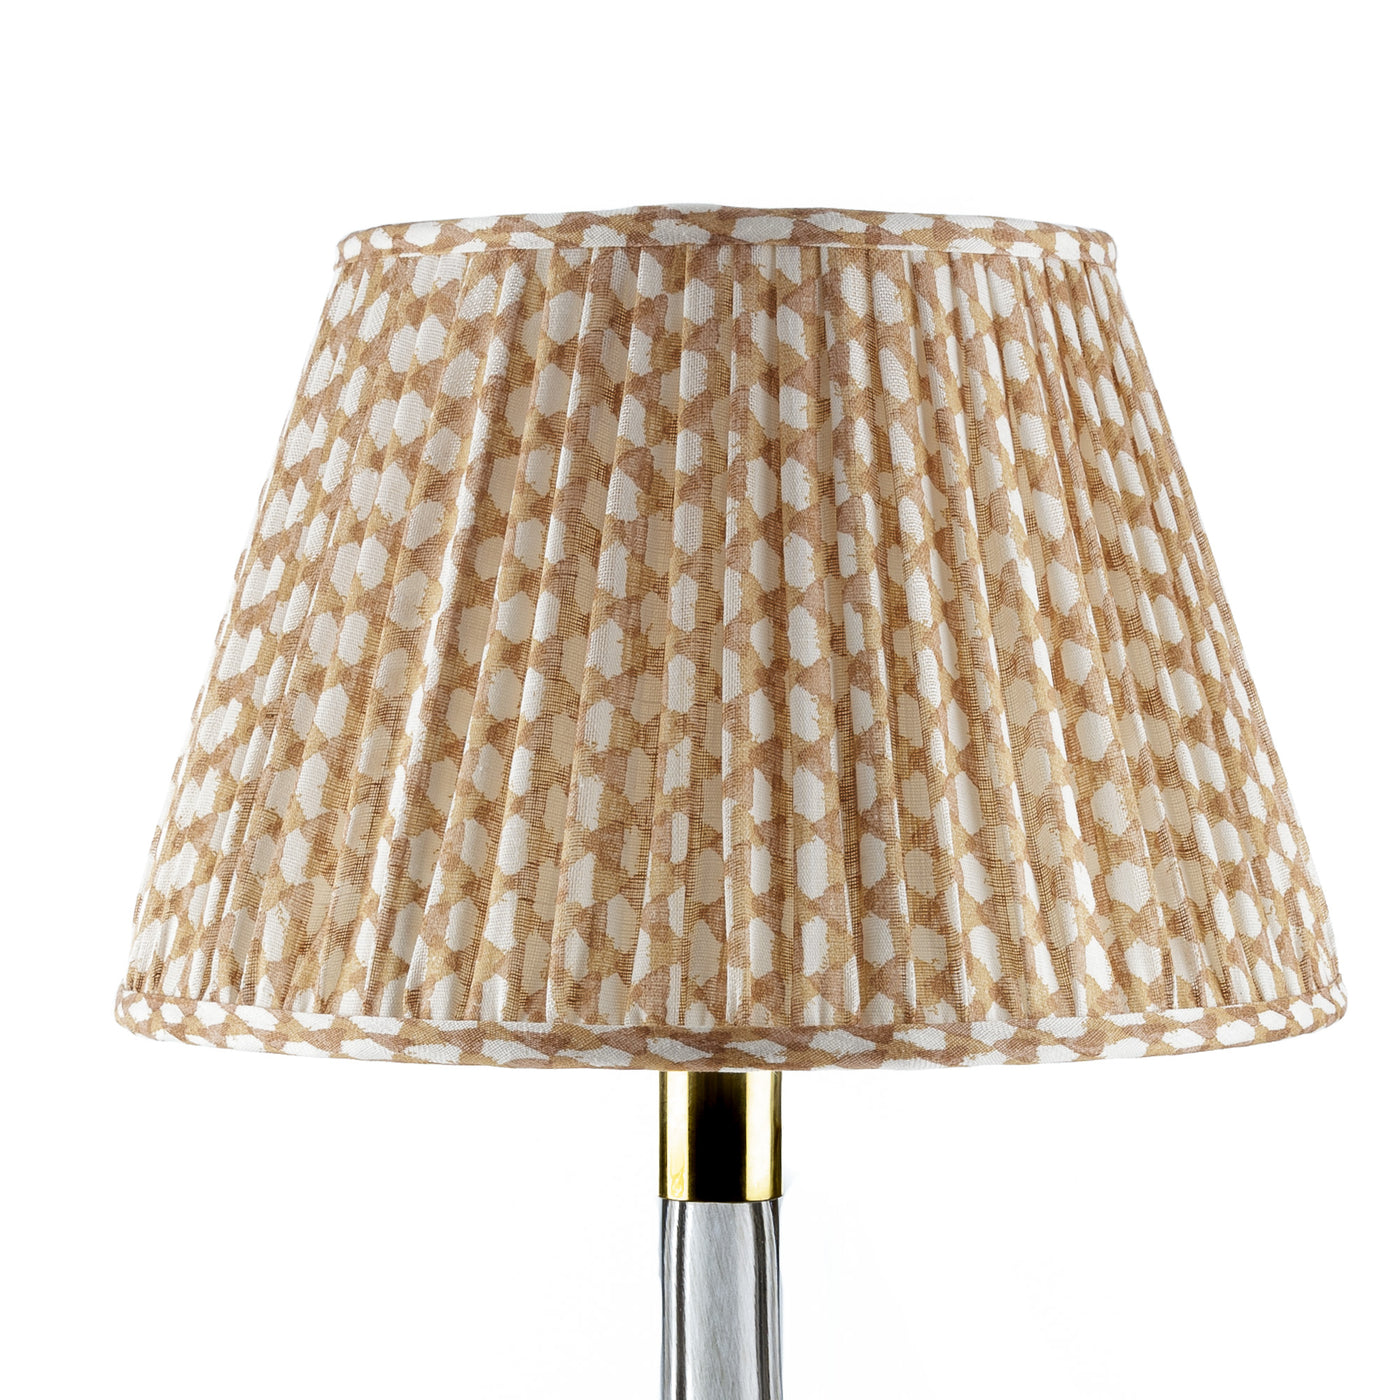 16" Fermoie Lampshade - Nut Brown Wicker | Newport Lamp And Shade | Located in Newport, RI